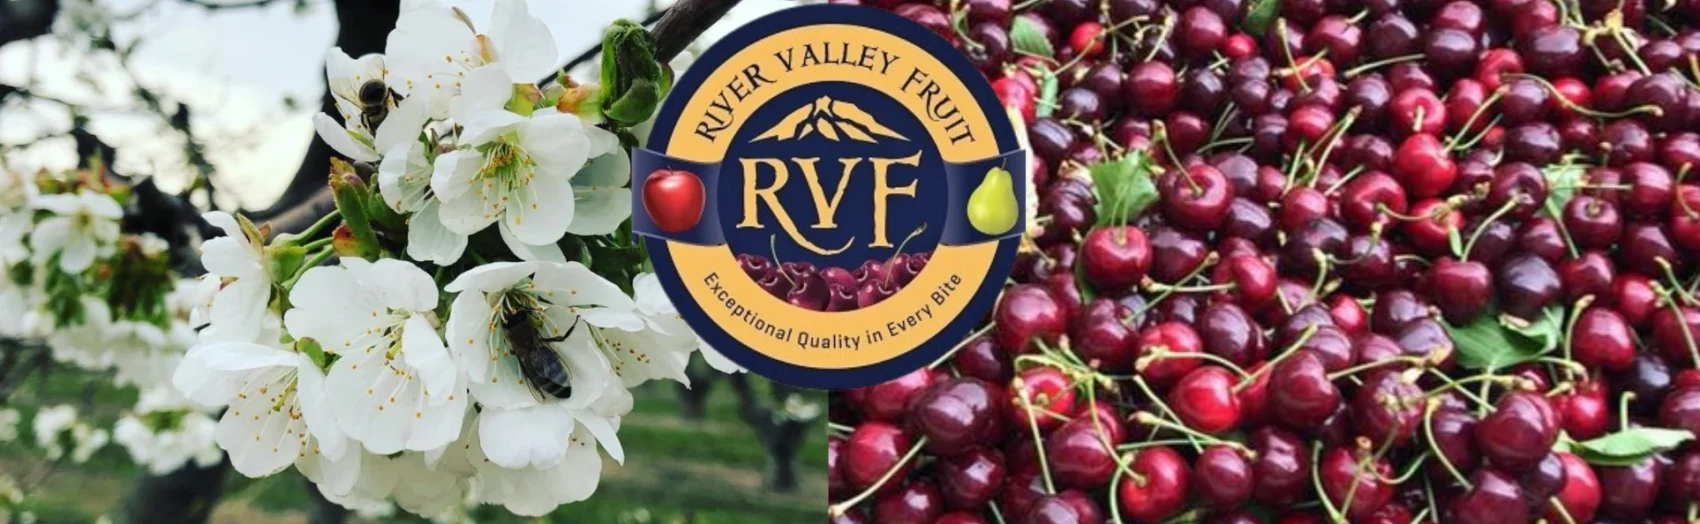 River Valley Fruit logo